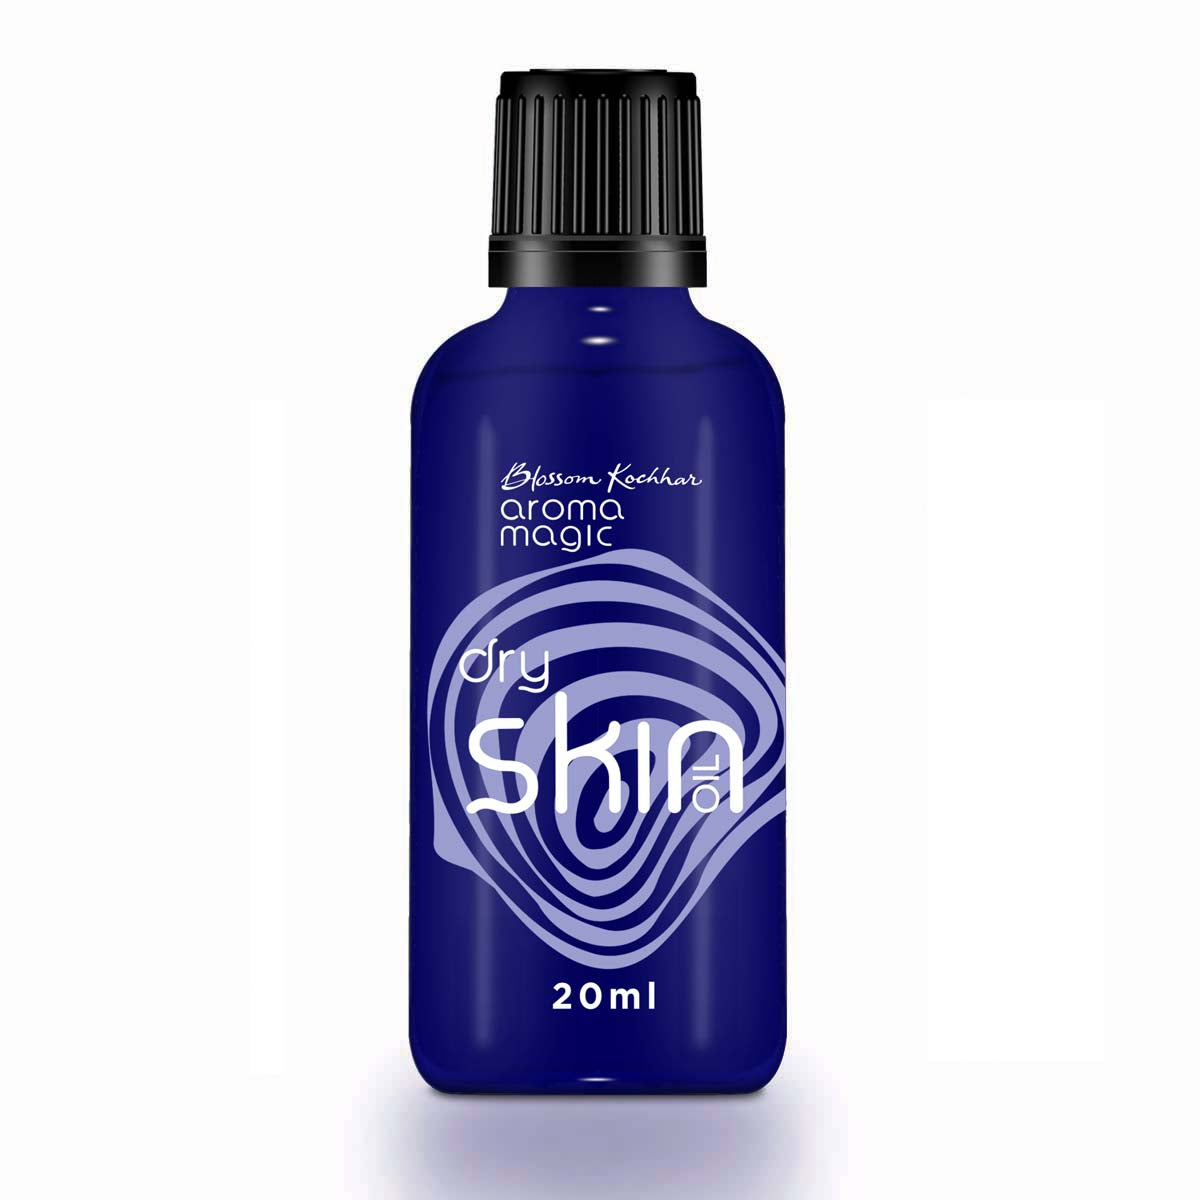 Aroma Magic Dry Skin Oil - Aroma Magic (1009460576299)